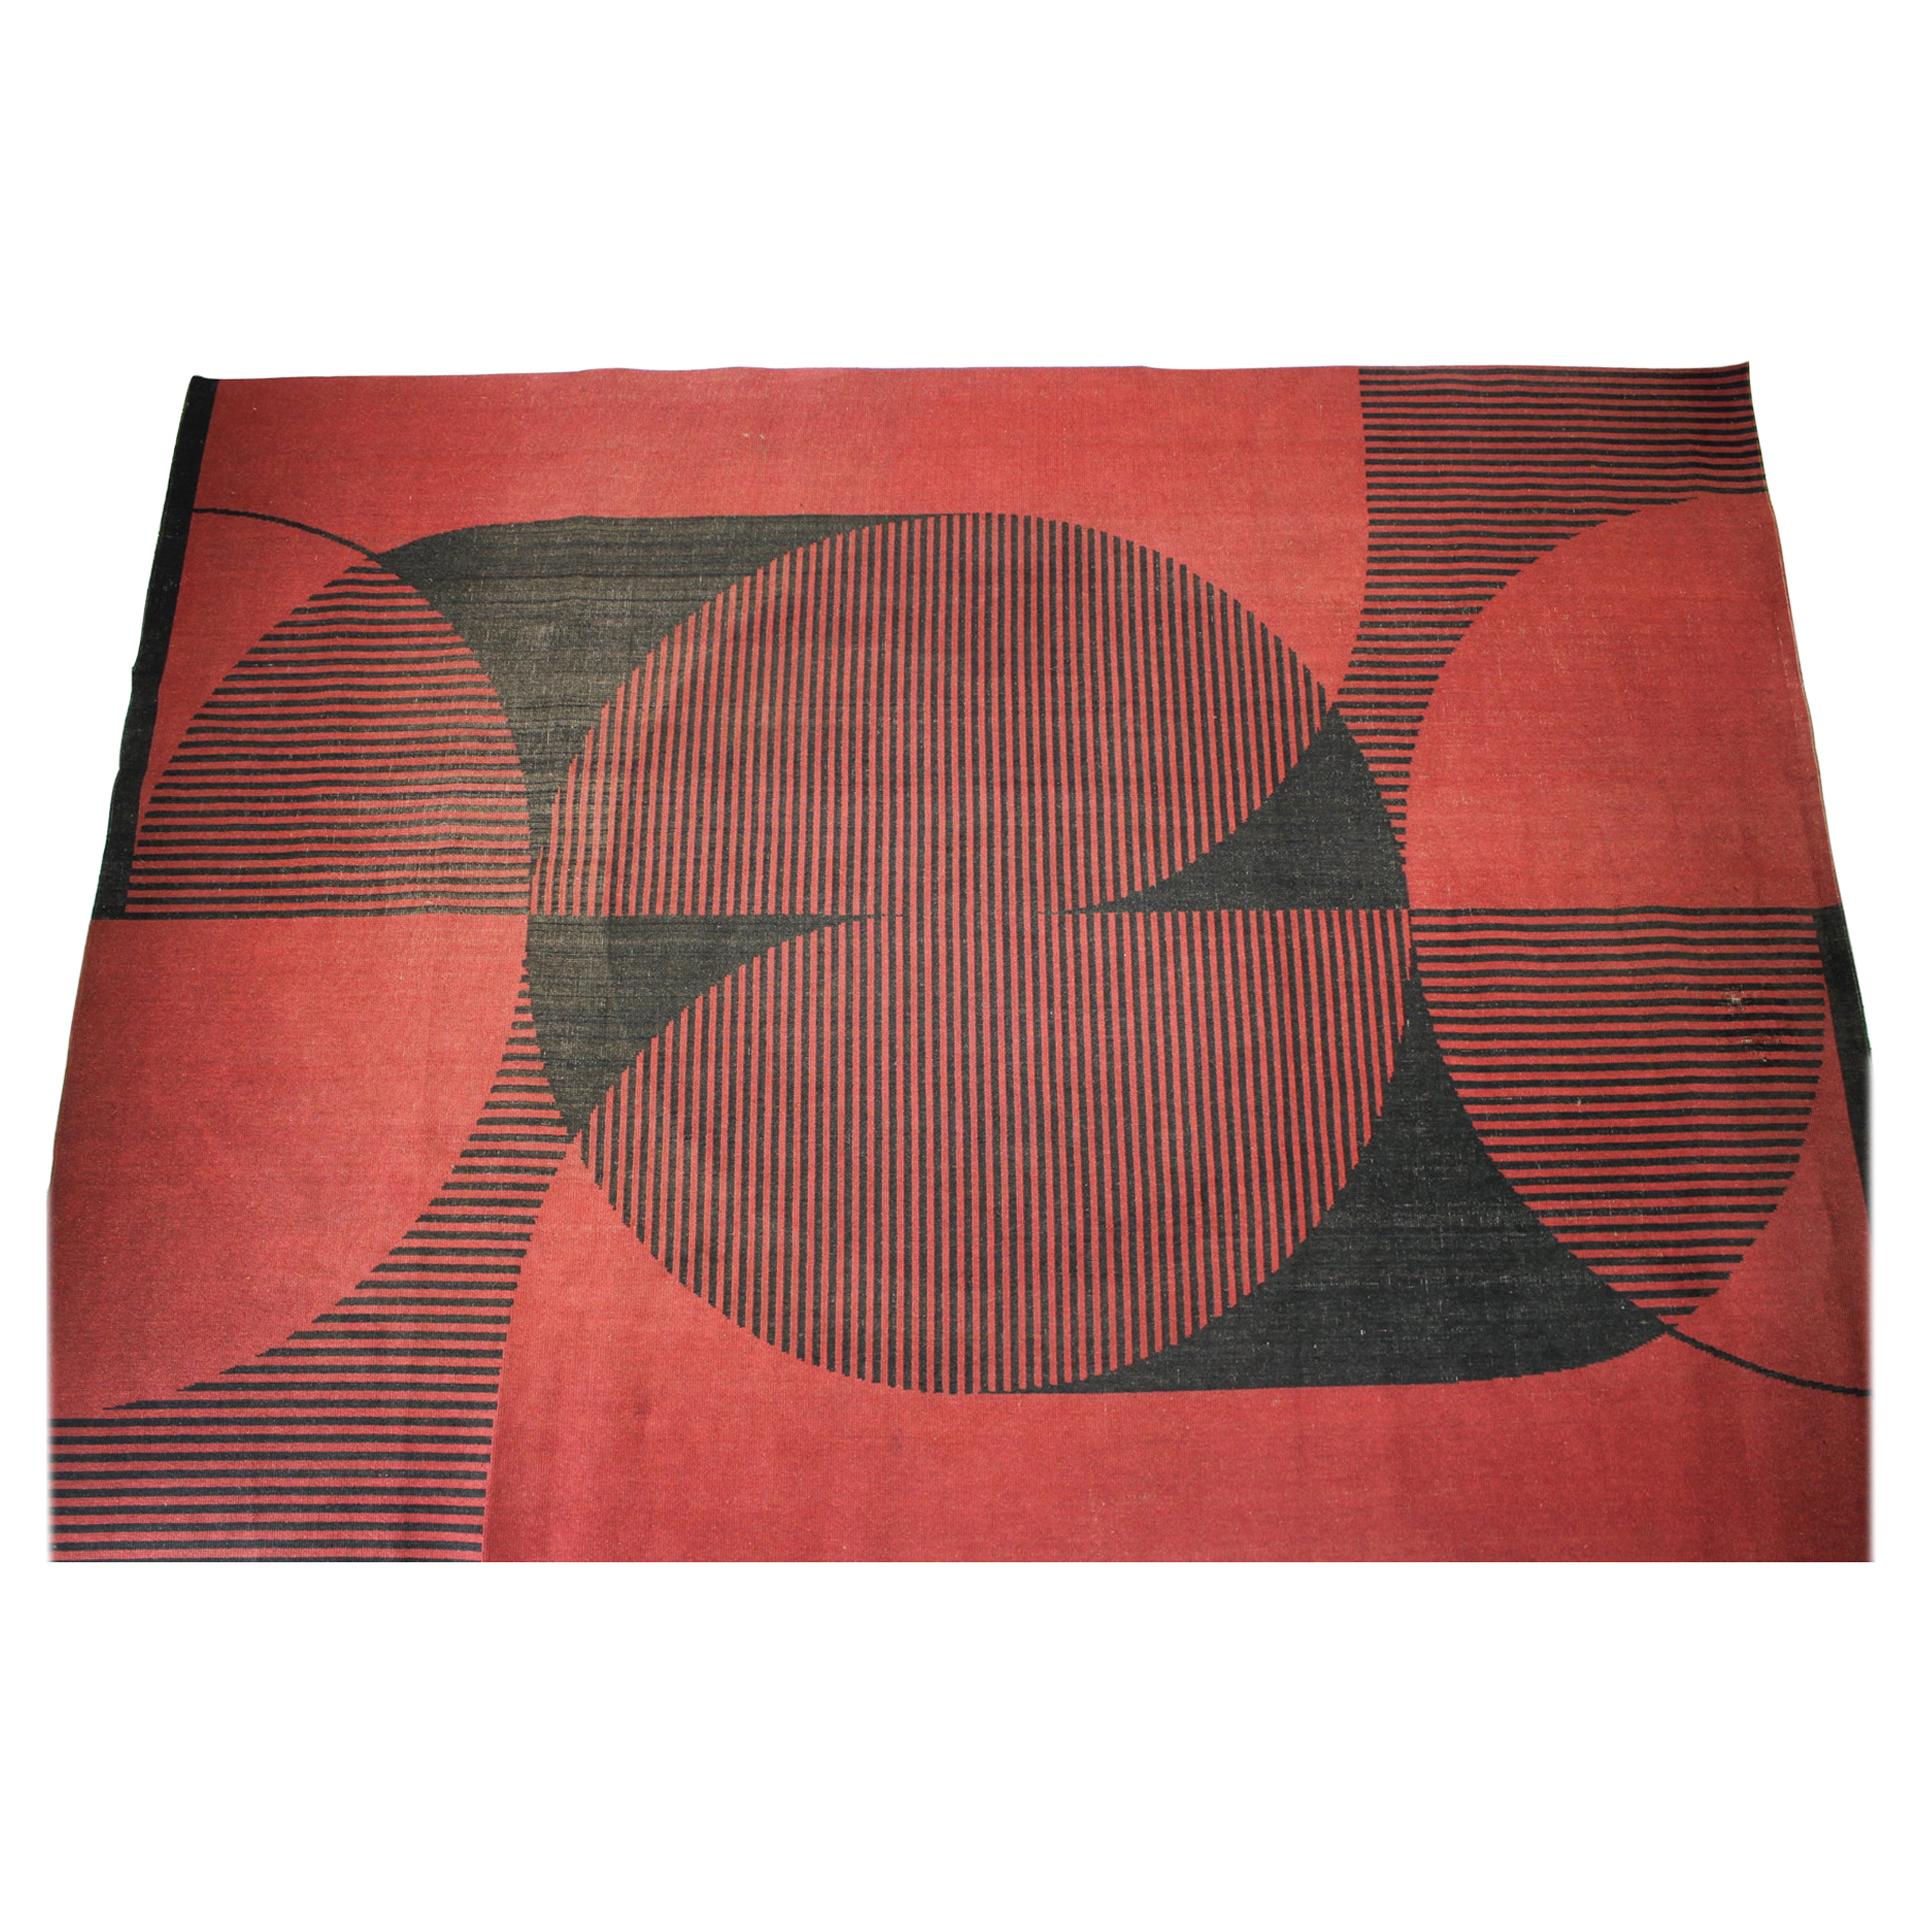 Abstract Modernist Geometric Design Carpet / Rug, 1970s For Sale